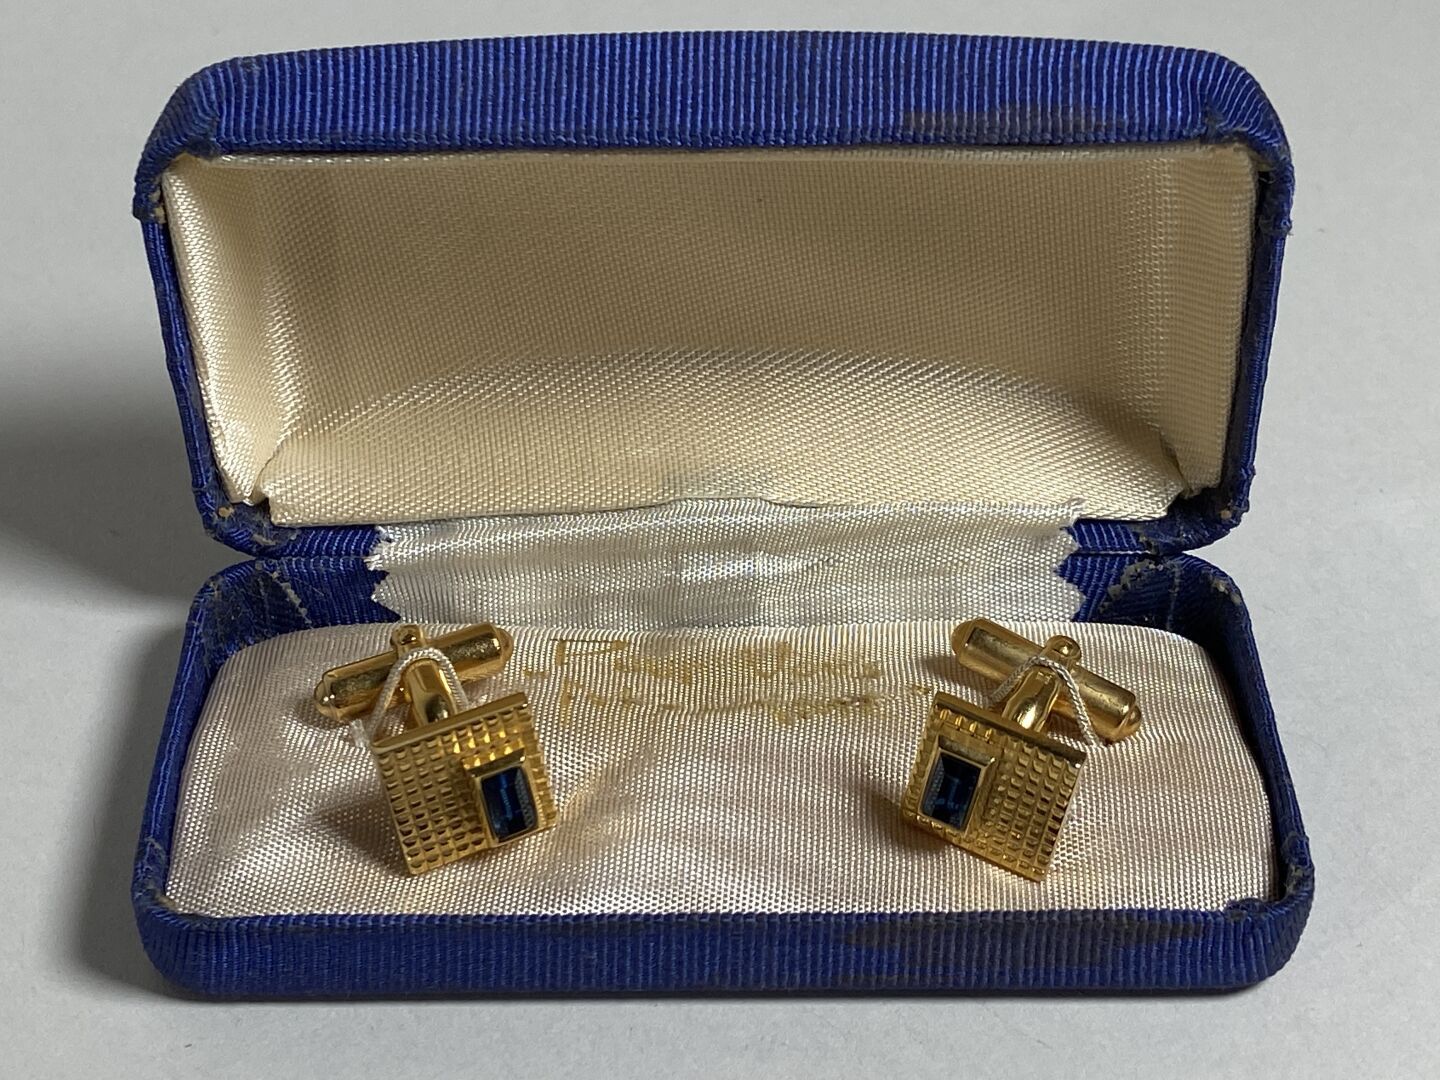 Null 一对方形扭索纹鎏金金属袖扣，镶嵌长方形切割的蓝色宝石。

呈现在原箱中。